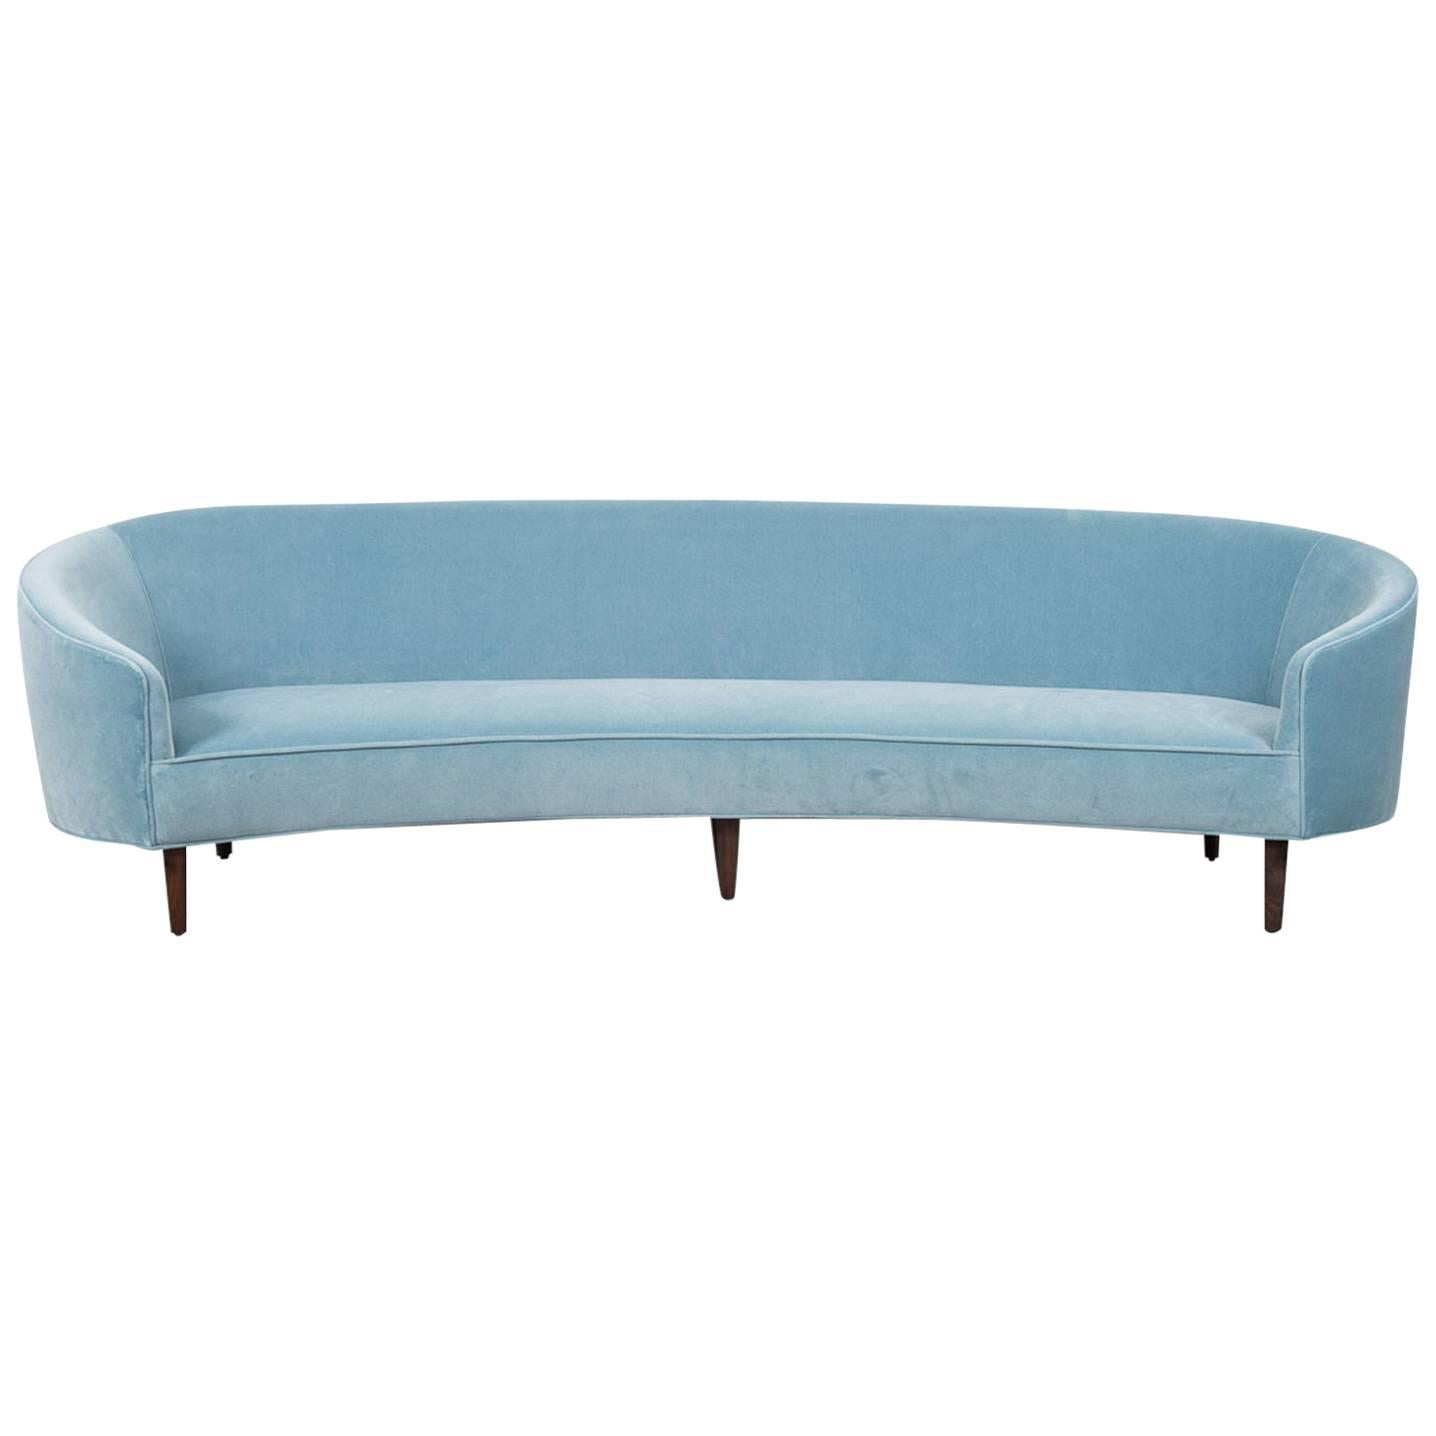 Art Deco Style Crescent Sofa with Walnut Legs in Capri Blue Velvet For Sale